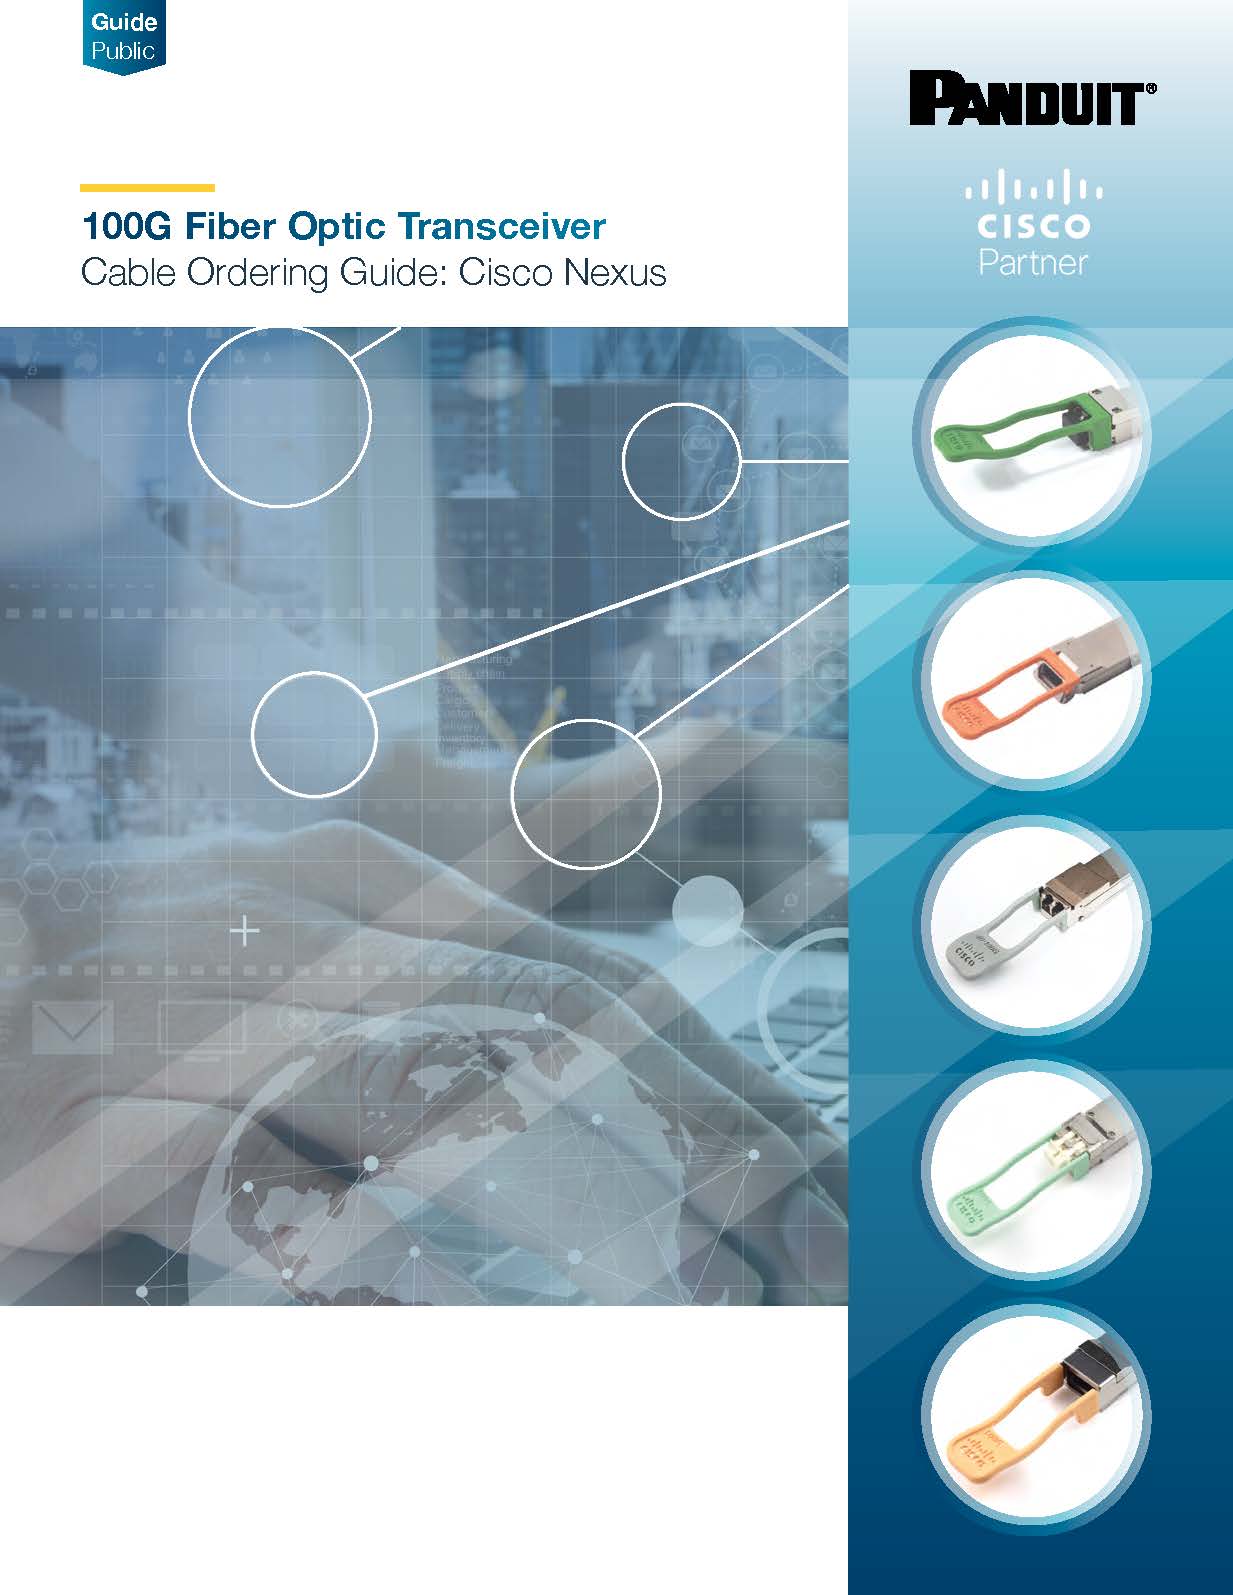 100G Fiber Optic Transceiver Cable Ordering Guide: Cisco Nexus